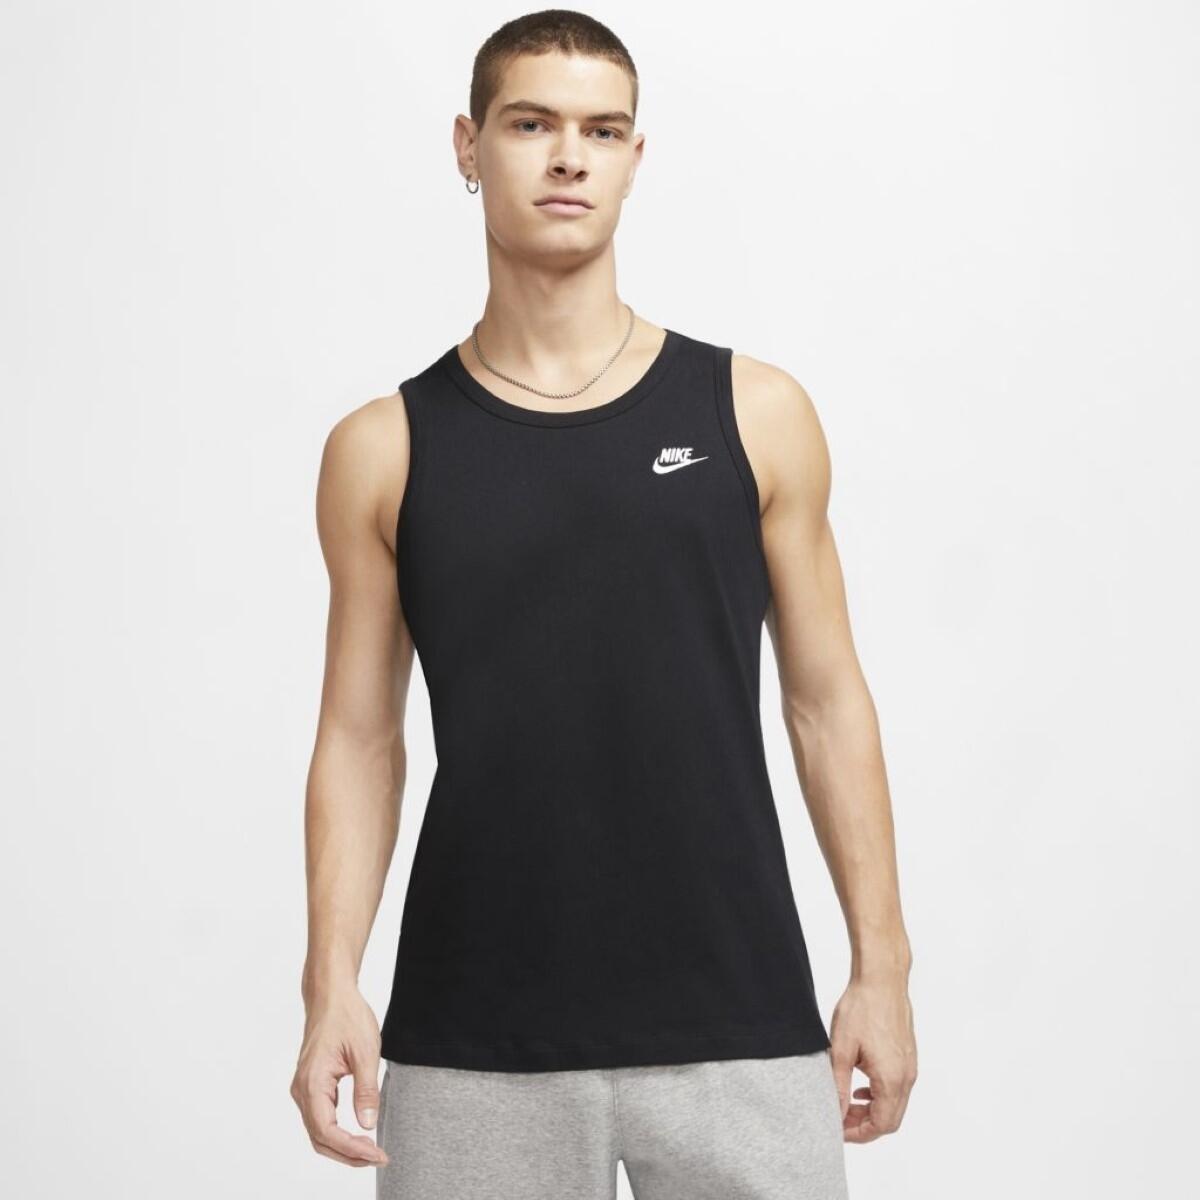 Camiseta Regata Nike Pro Tank - Preto